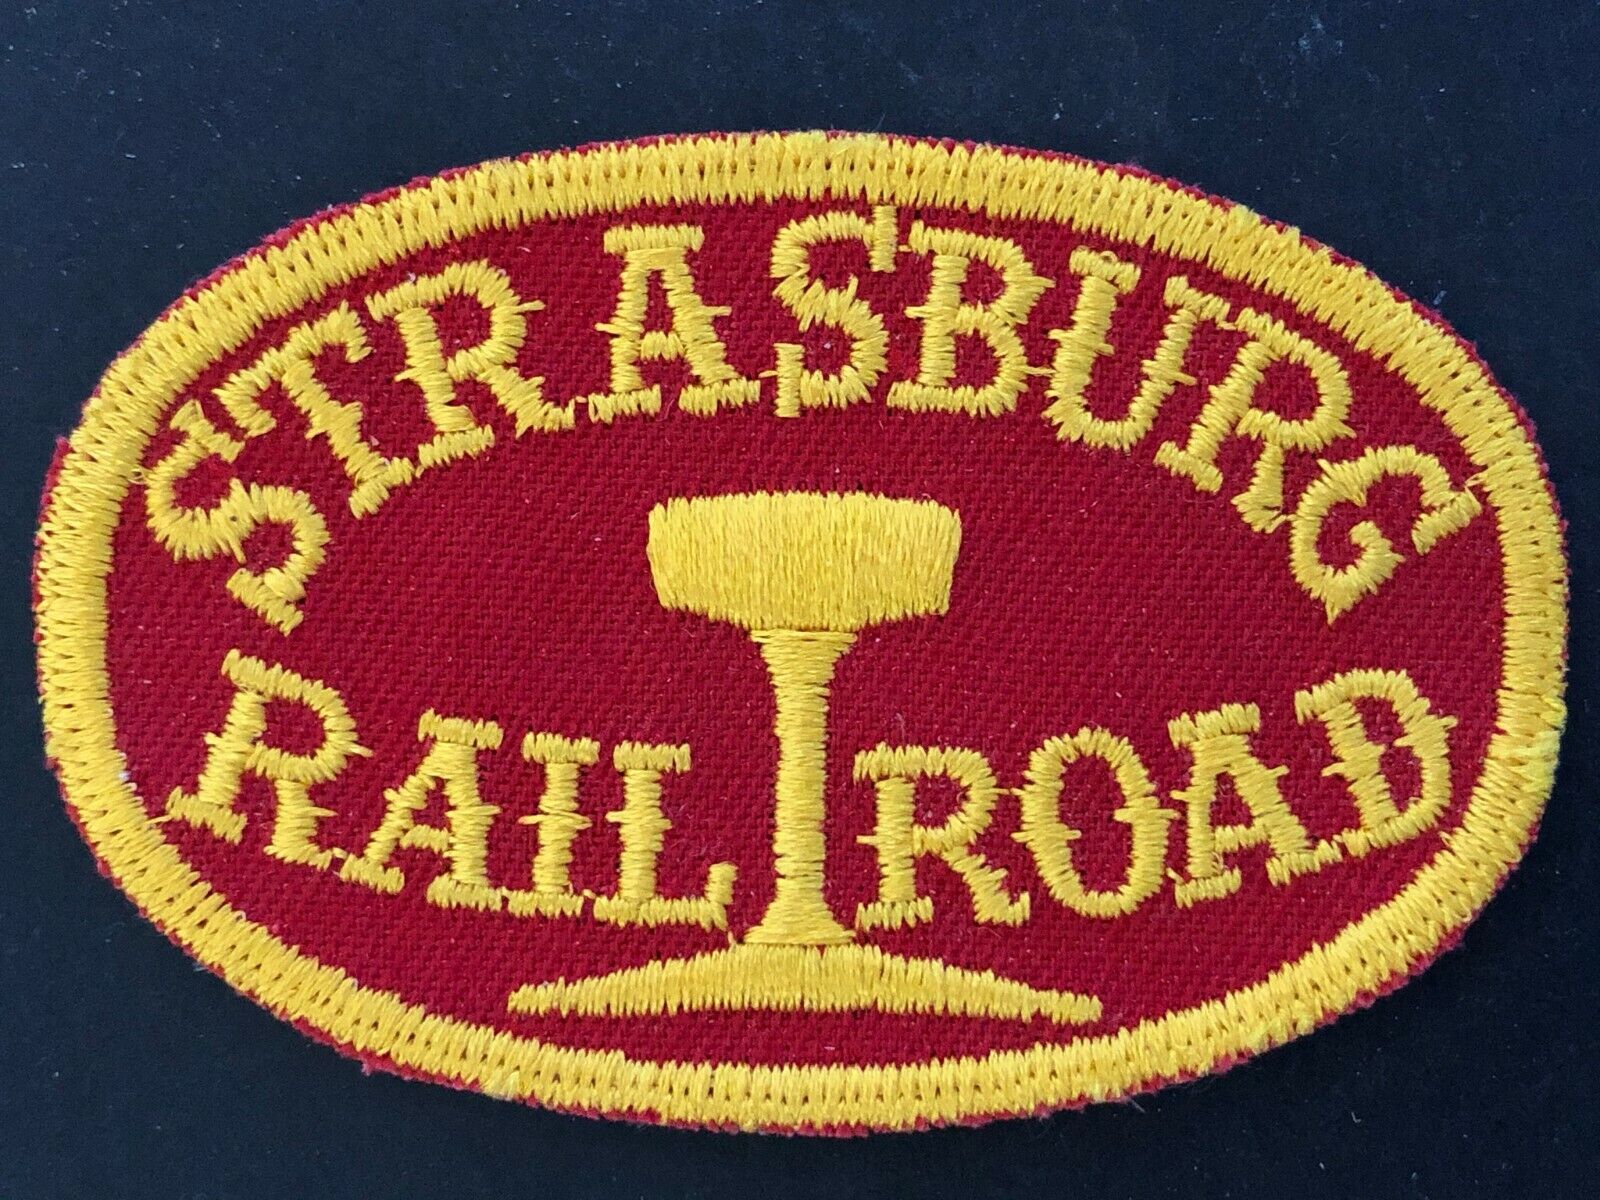 c1970-80's Vintage Machine Stitched Embroidered Patch - Strasburg Railroad